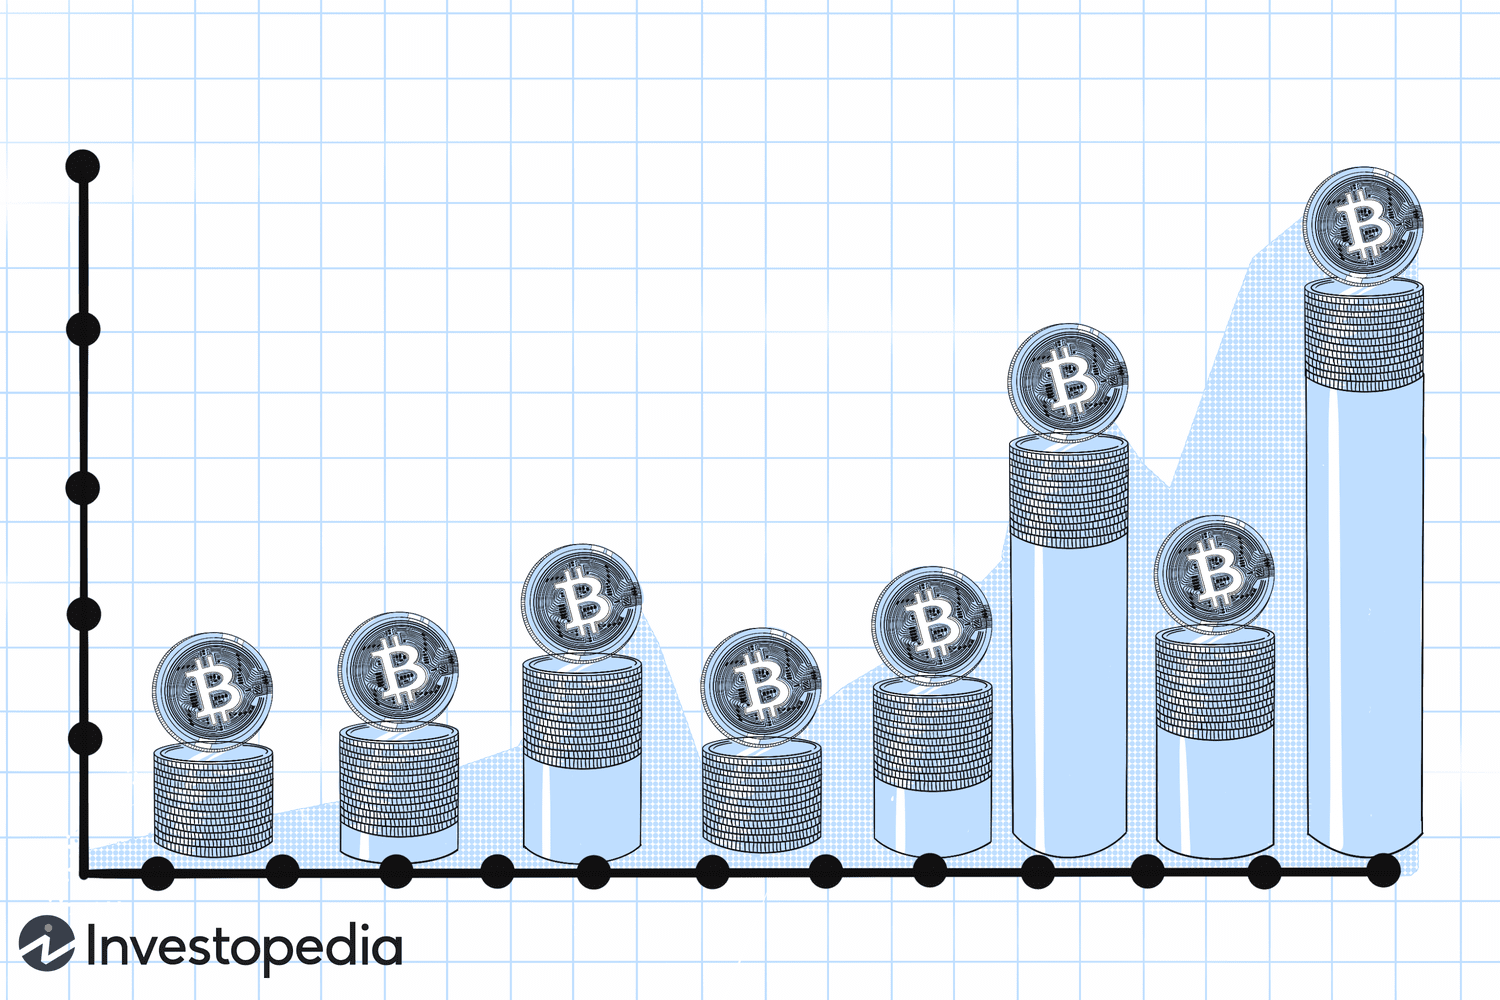 What Determines Bitcoin's Price?